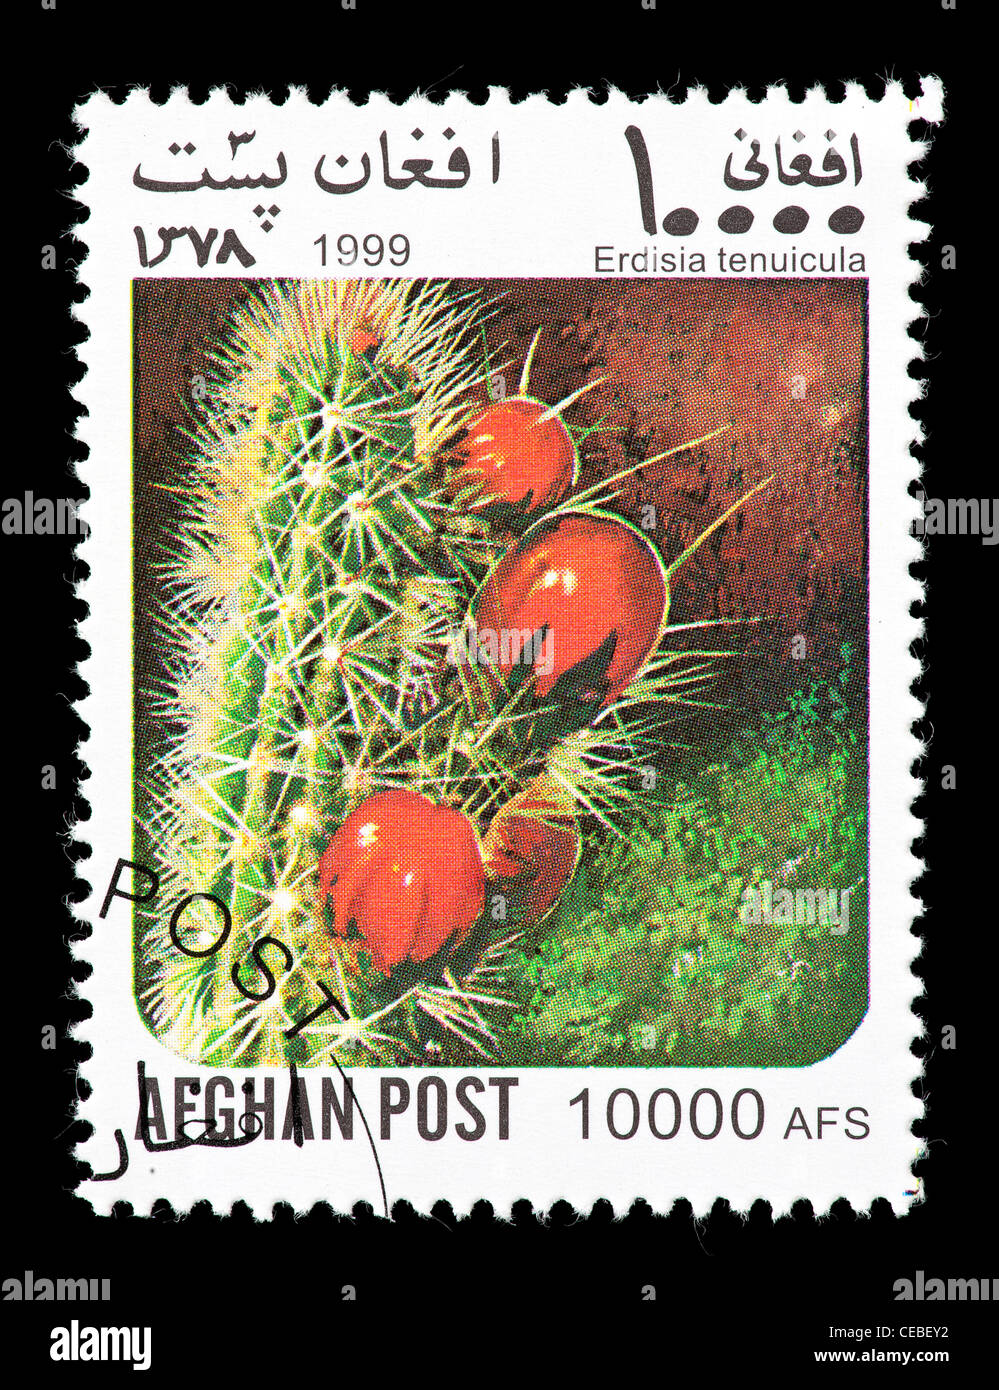 Postage stamp from Afghanistan depicting flowering cacti (Erdisia tenuicula). Stock Photo